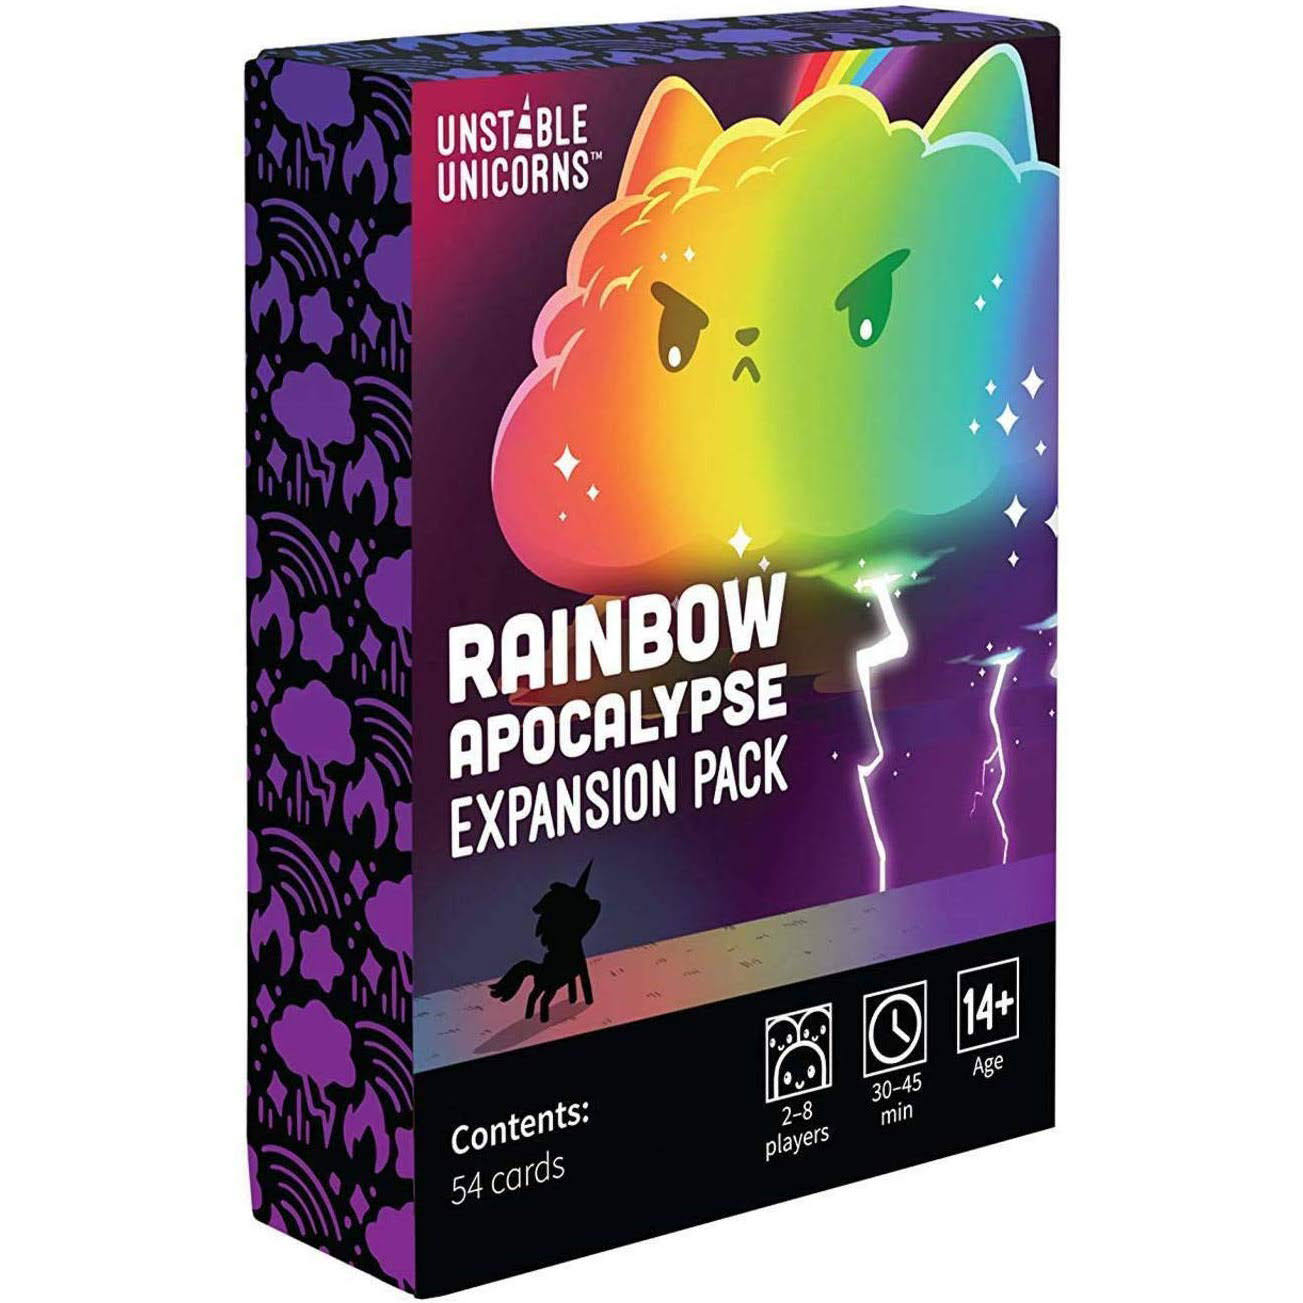 Unstable Unicorns Rainbow Apocalypse Expansion Game Pack